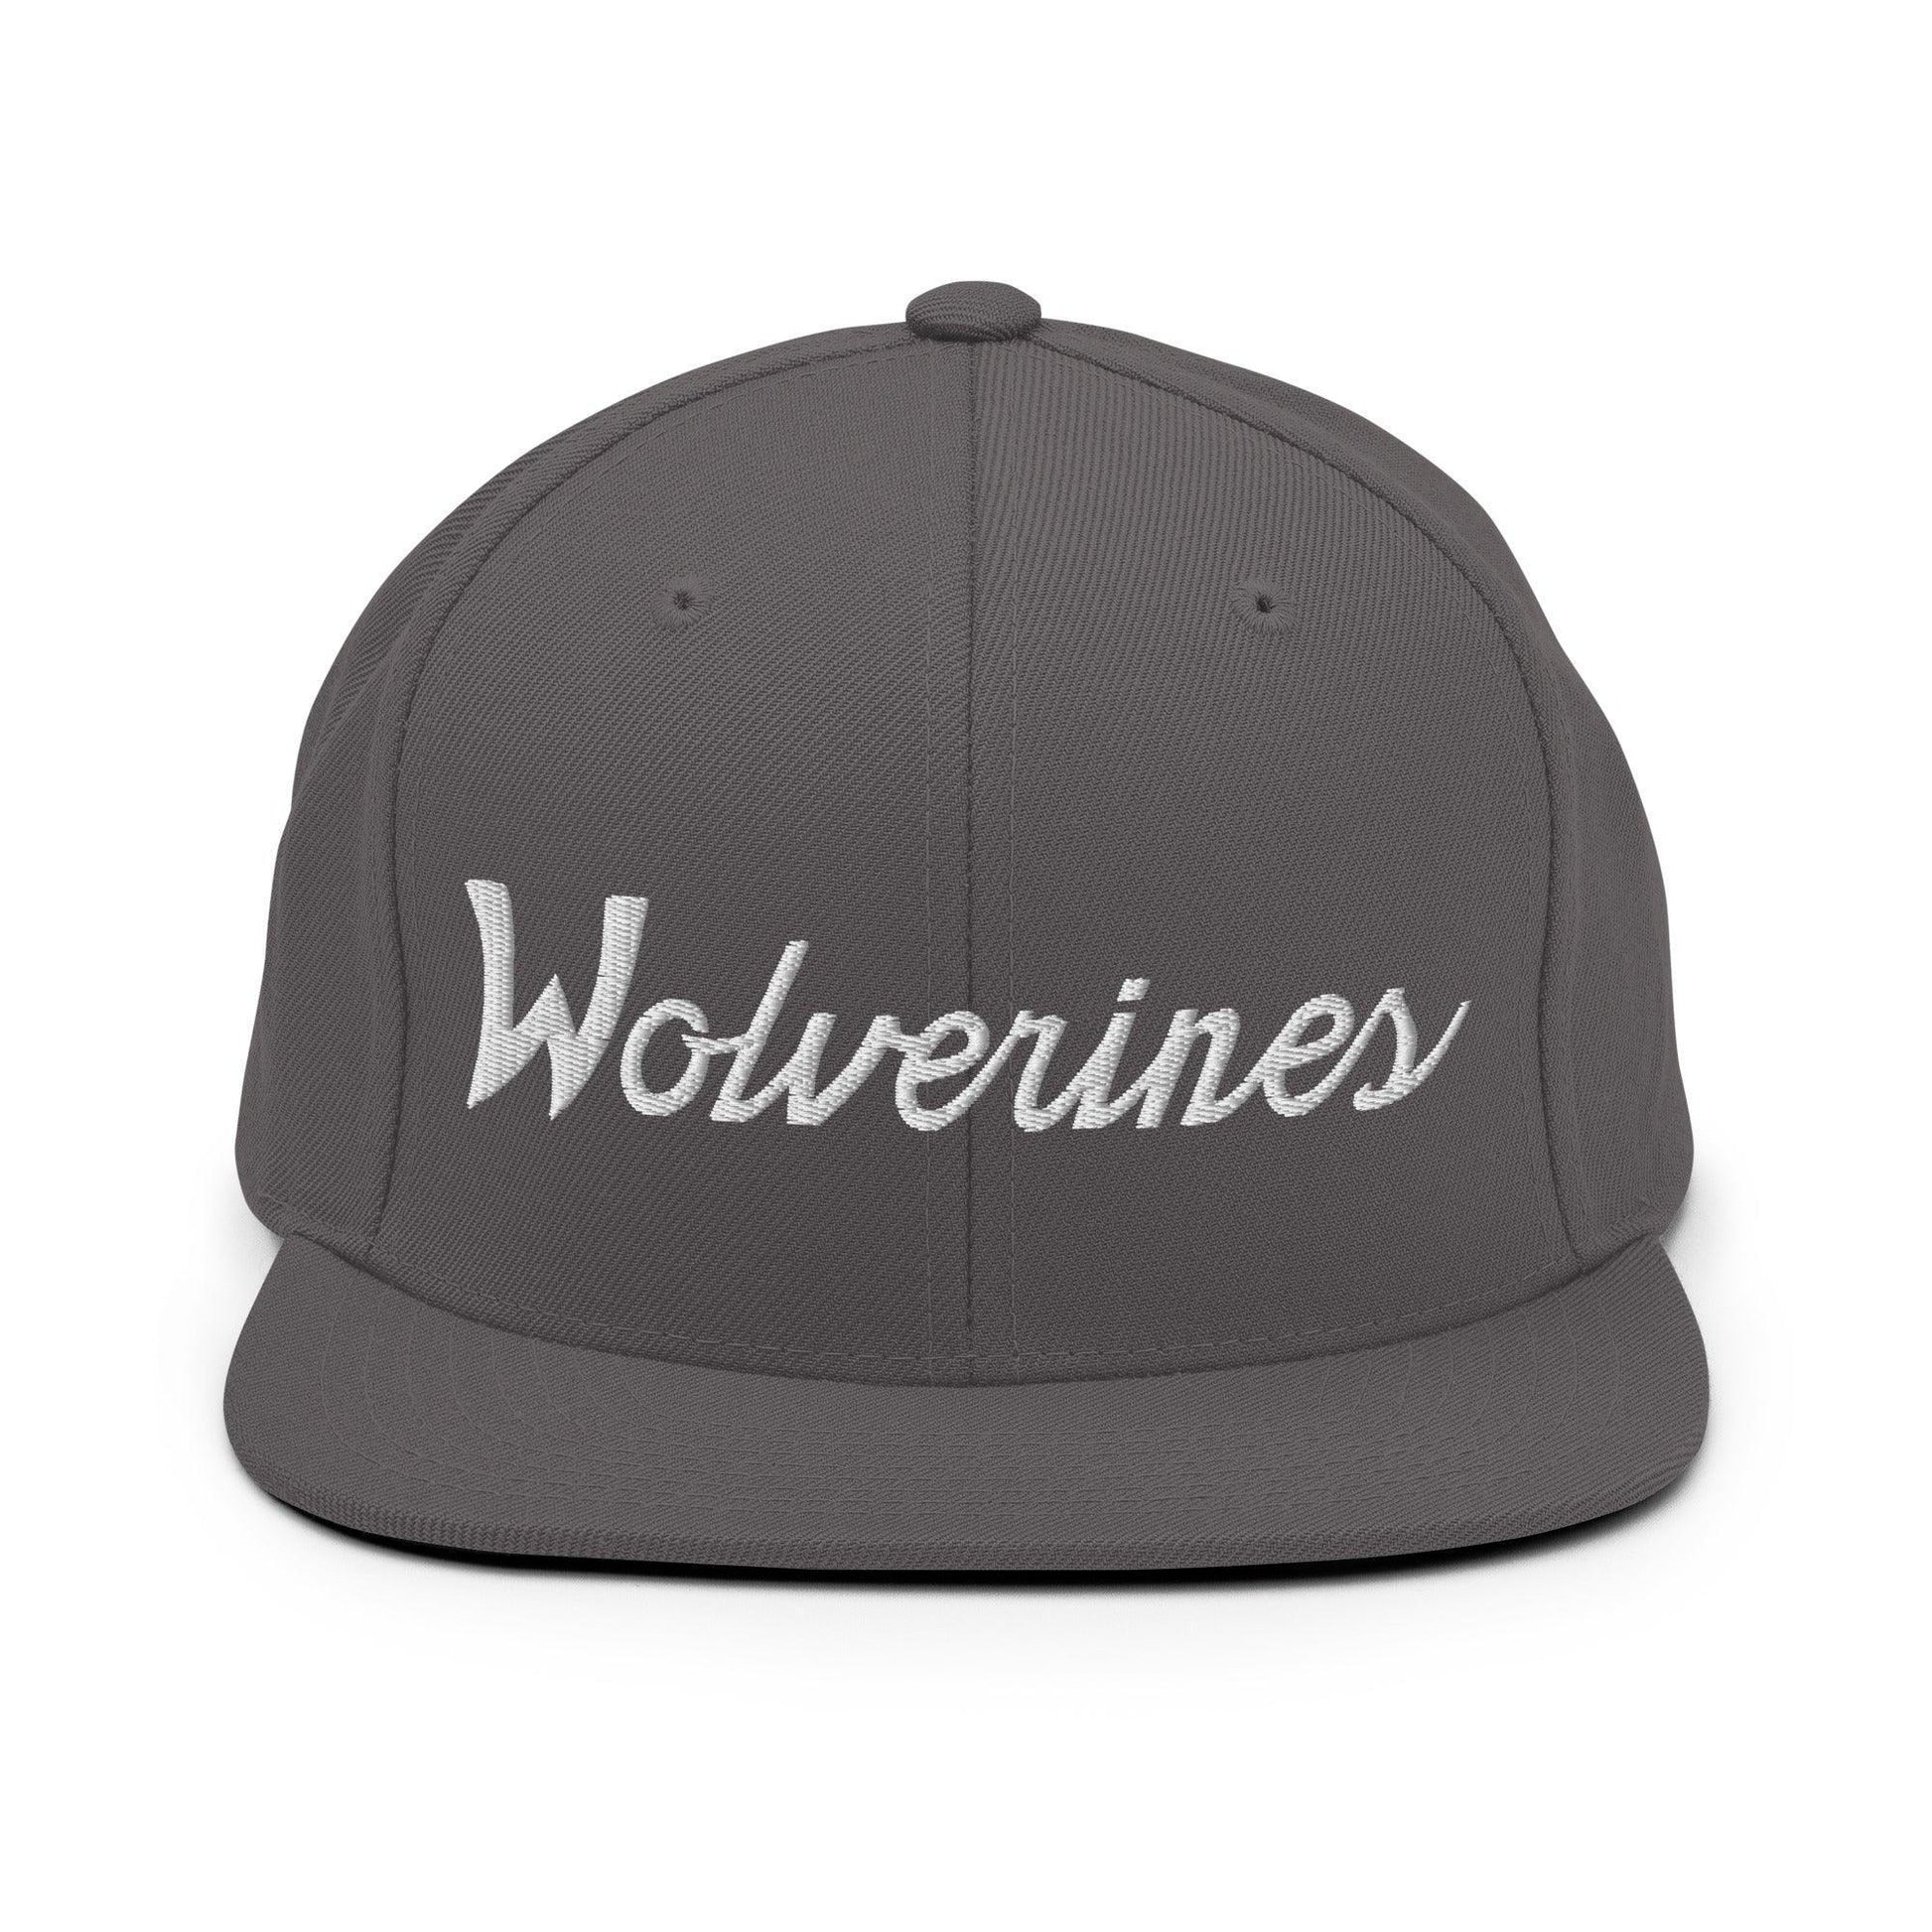 Wolverines School Mascot Script Snapback Hat Dark Grey